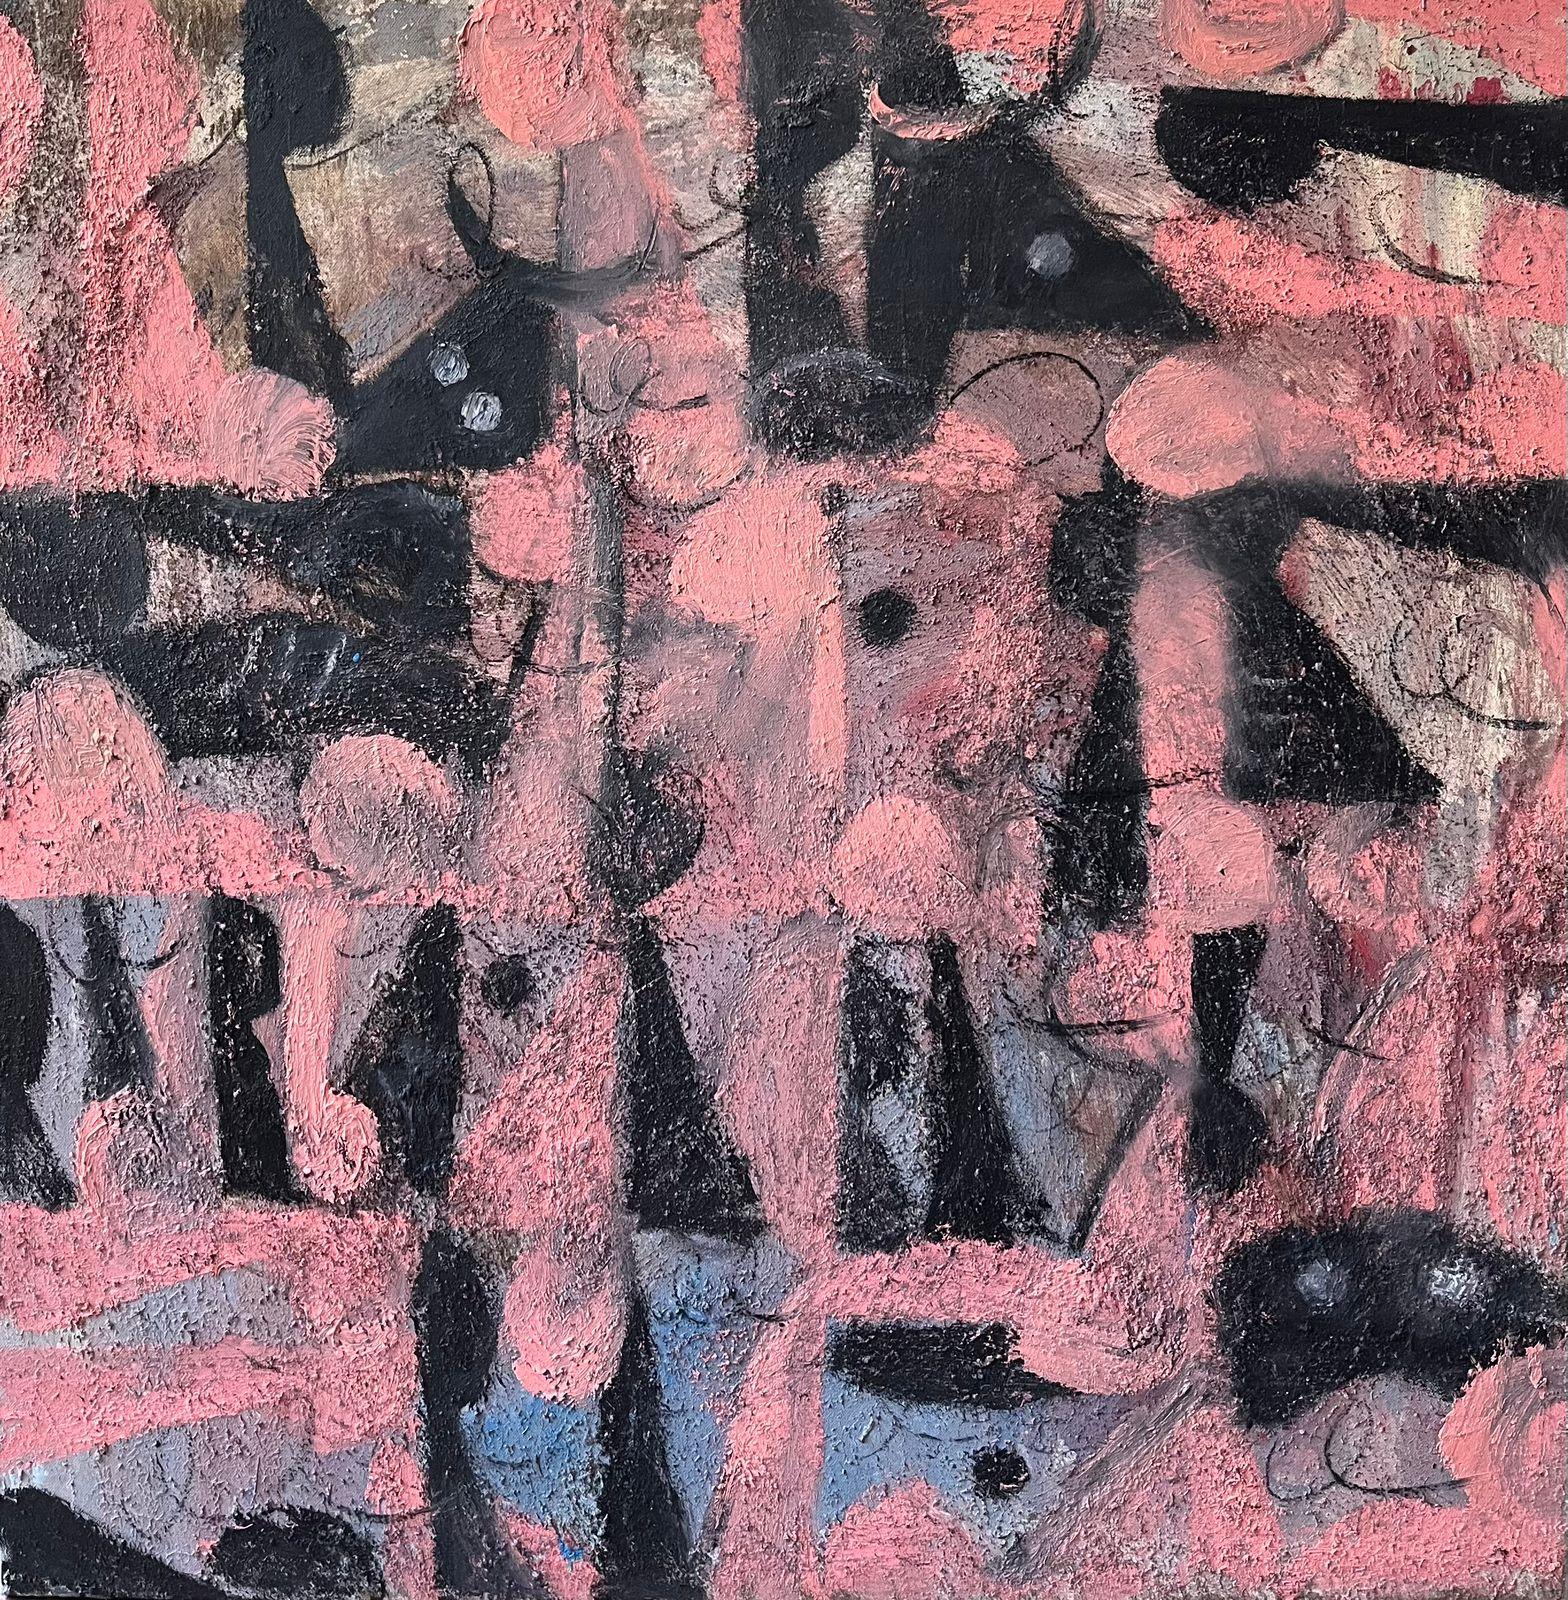 Abstract Painting Dario Sandoval - Crepusculo, Art contemporain, Peinture abstraite, 21ème siècle